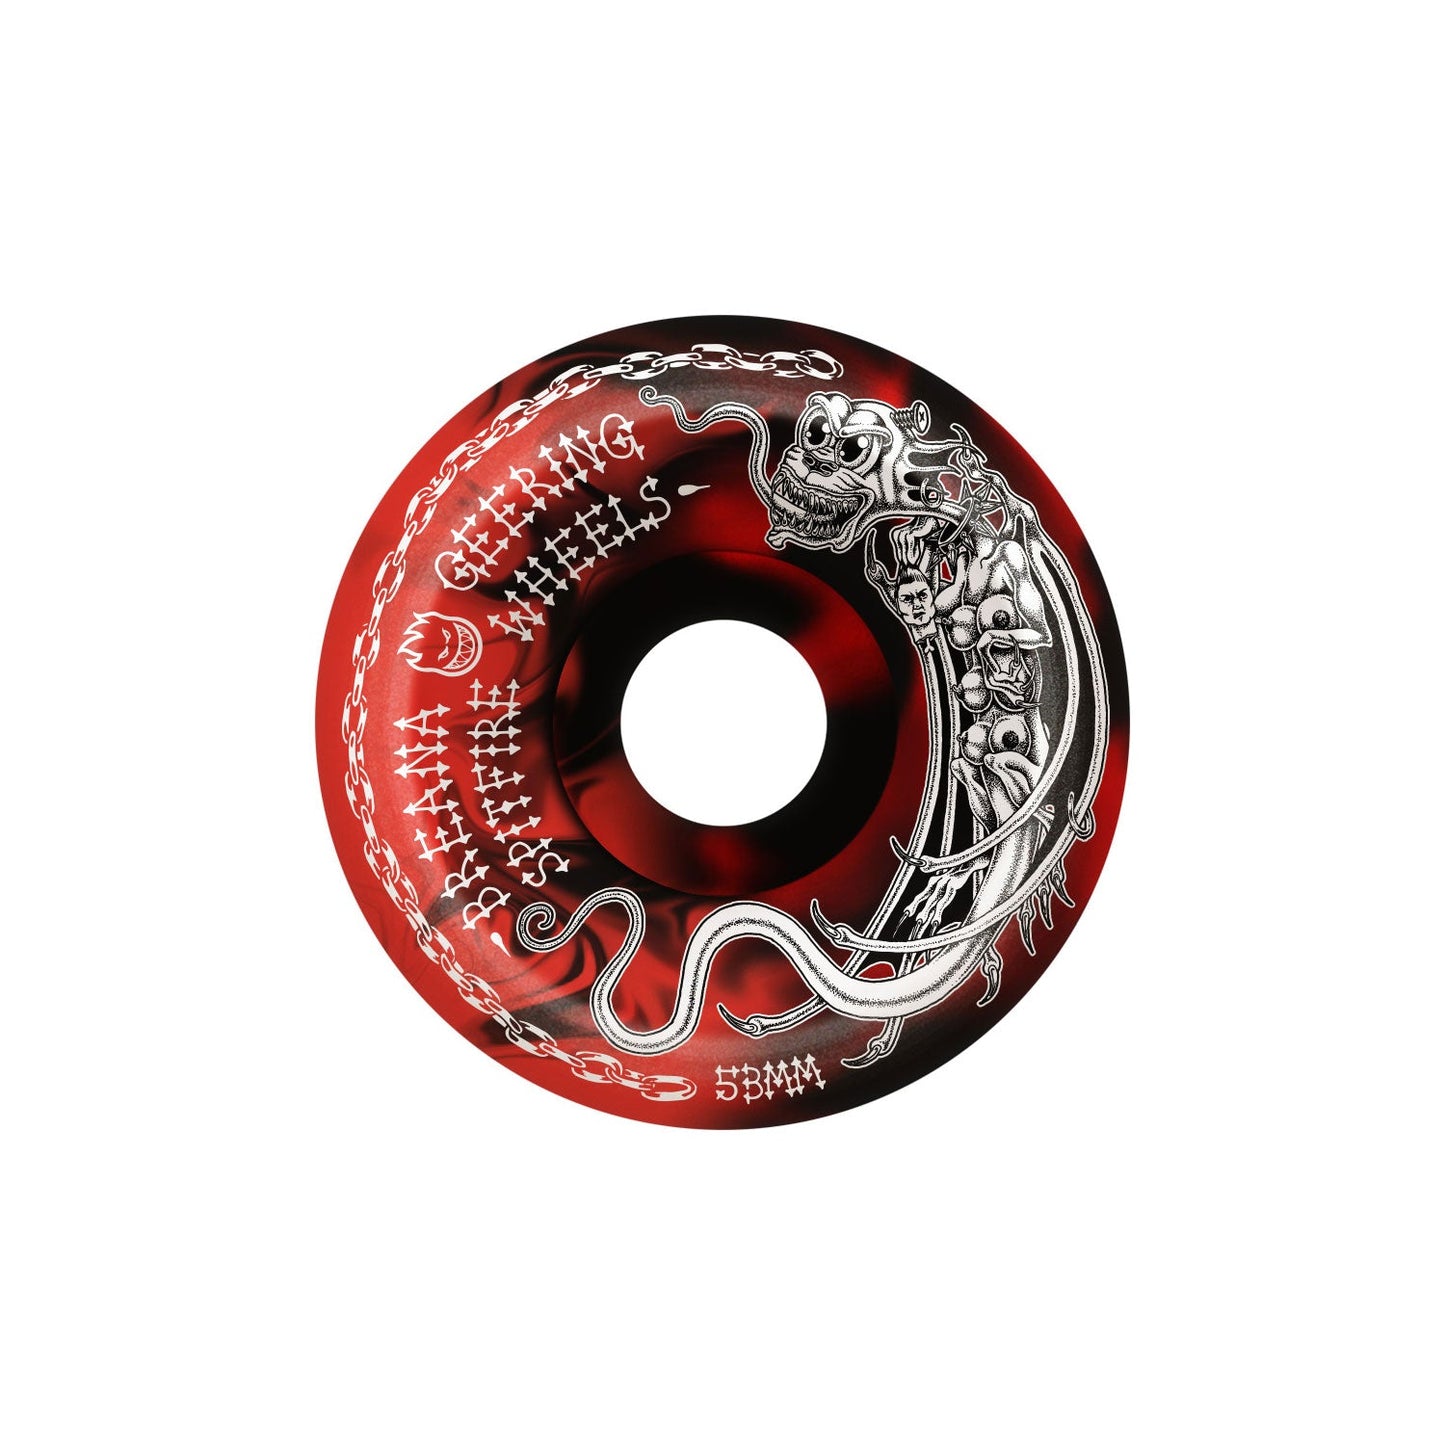 Spitfire F4 99 Breana Tormentor Conical Full Wheels, black / red (53mm) - Tiki Room Skateboards - 1